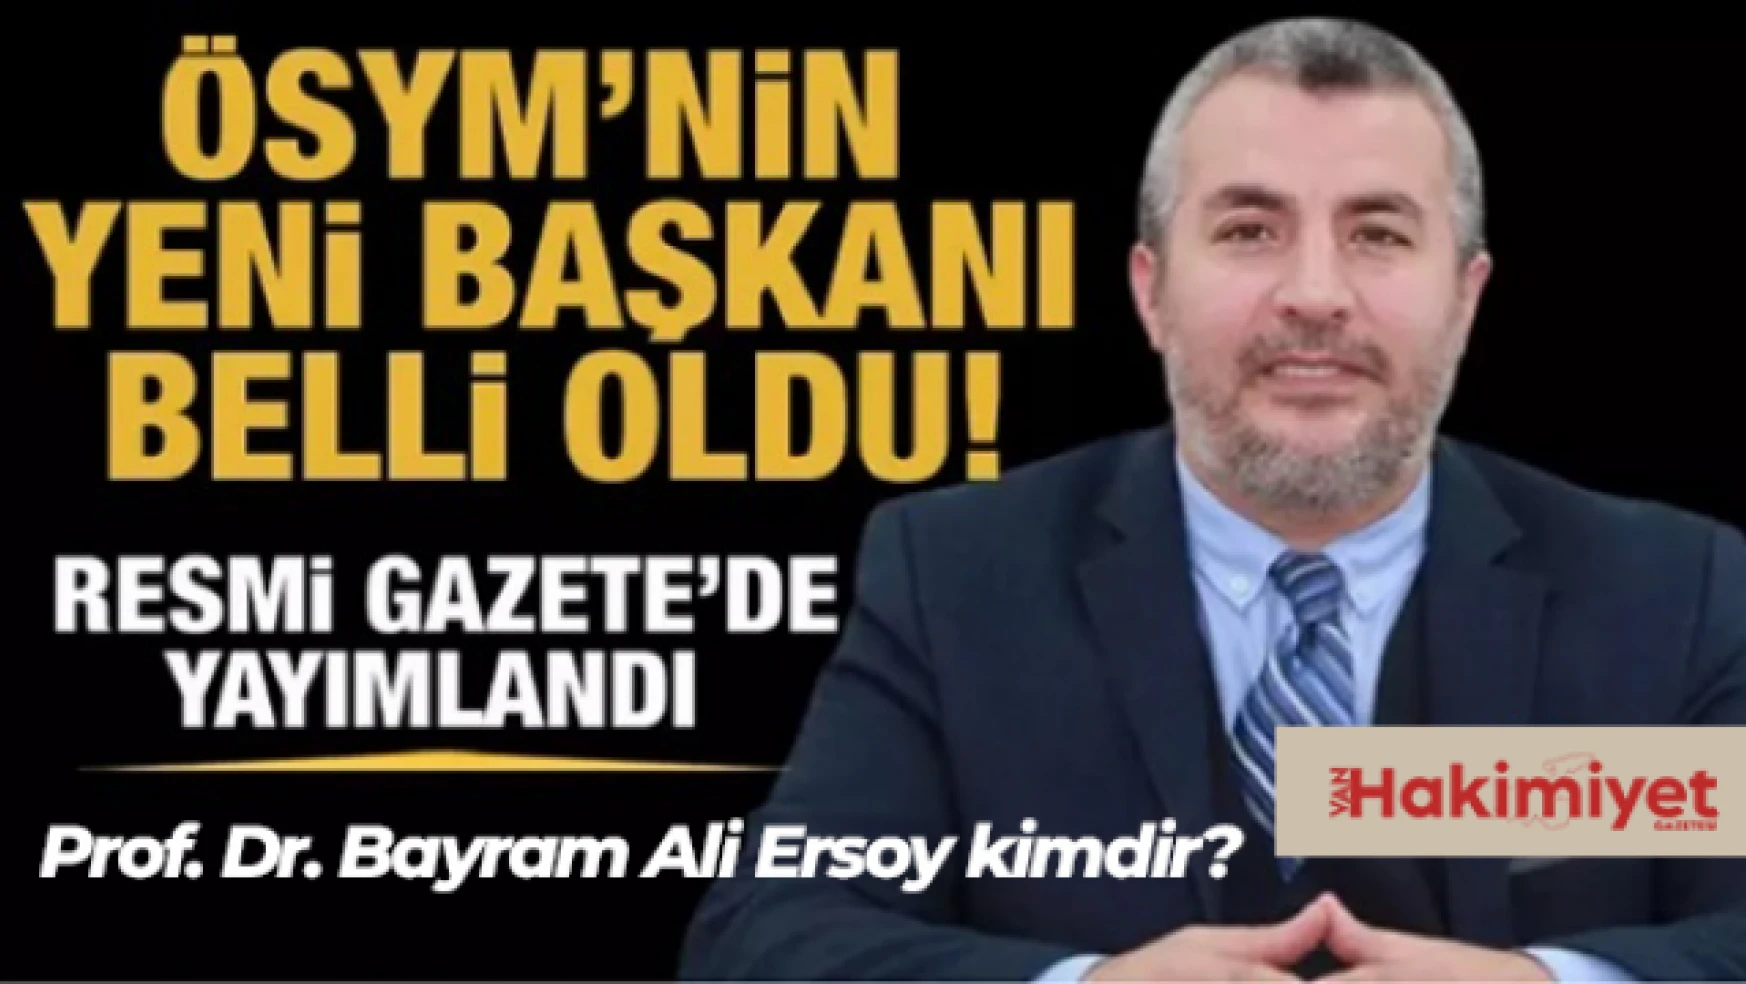 ÖSYM'nin yeni başkanı kim oldu? Prof. Dr. Bayram Ali Ersoy kimdir?